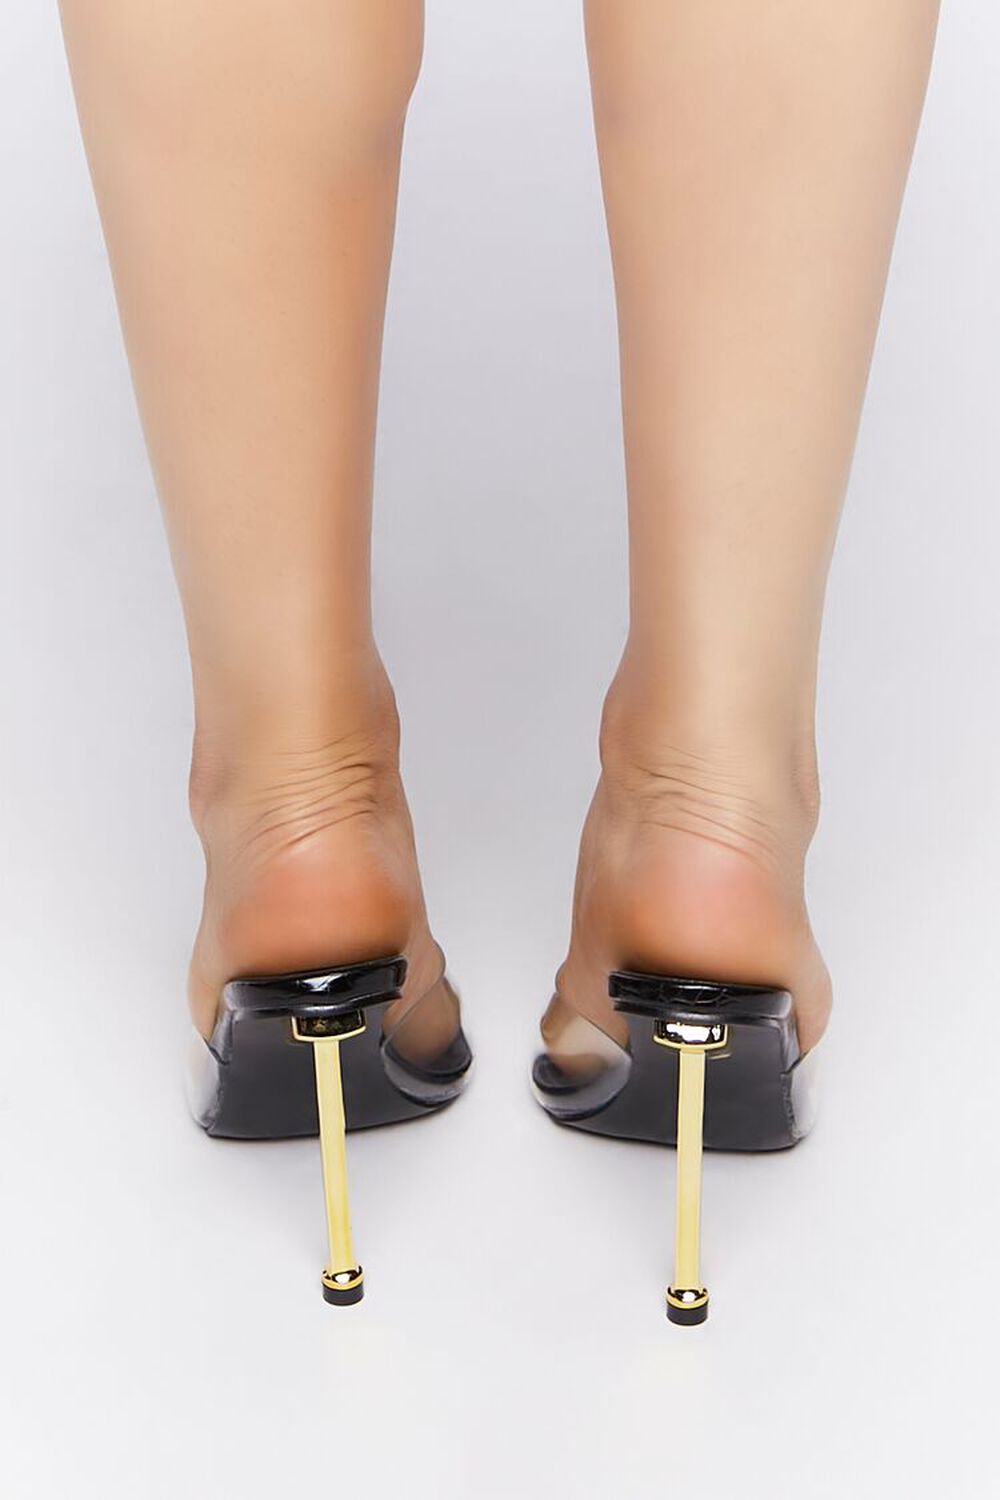 BLACK Clear-Strap Stiletto Heels, image 3